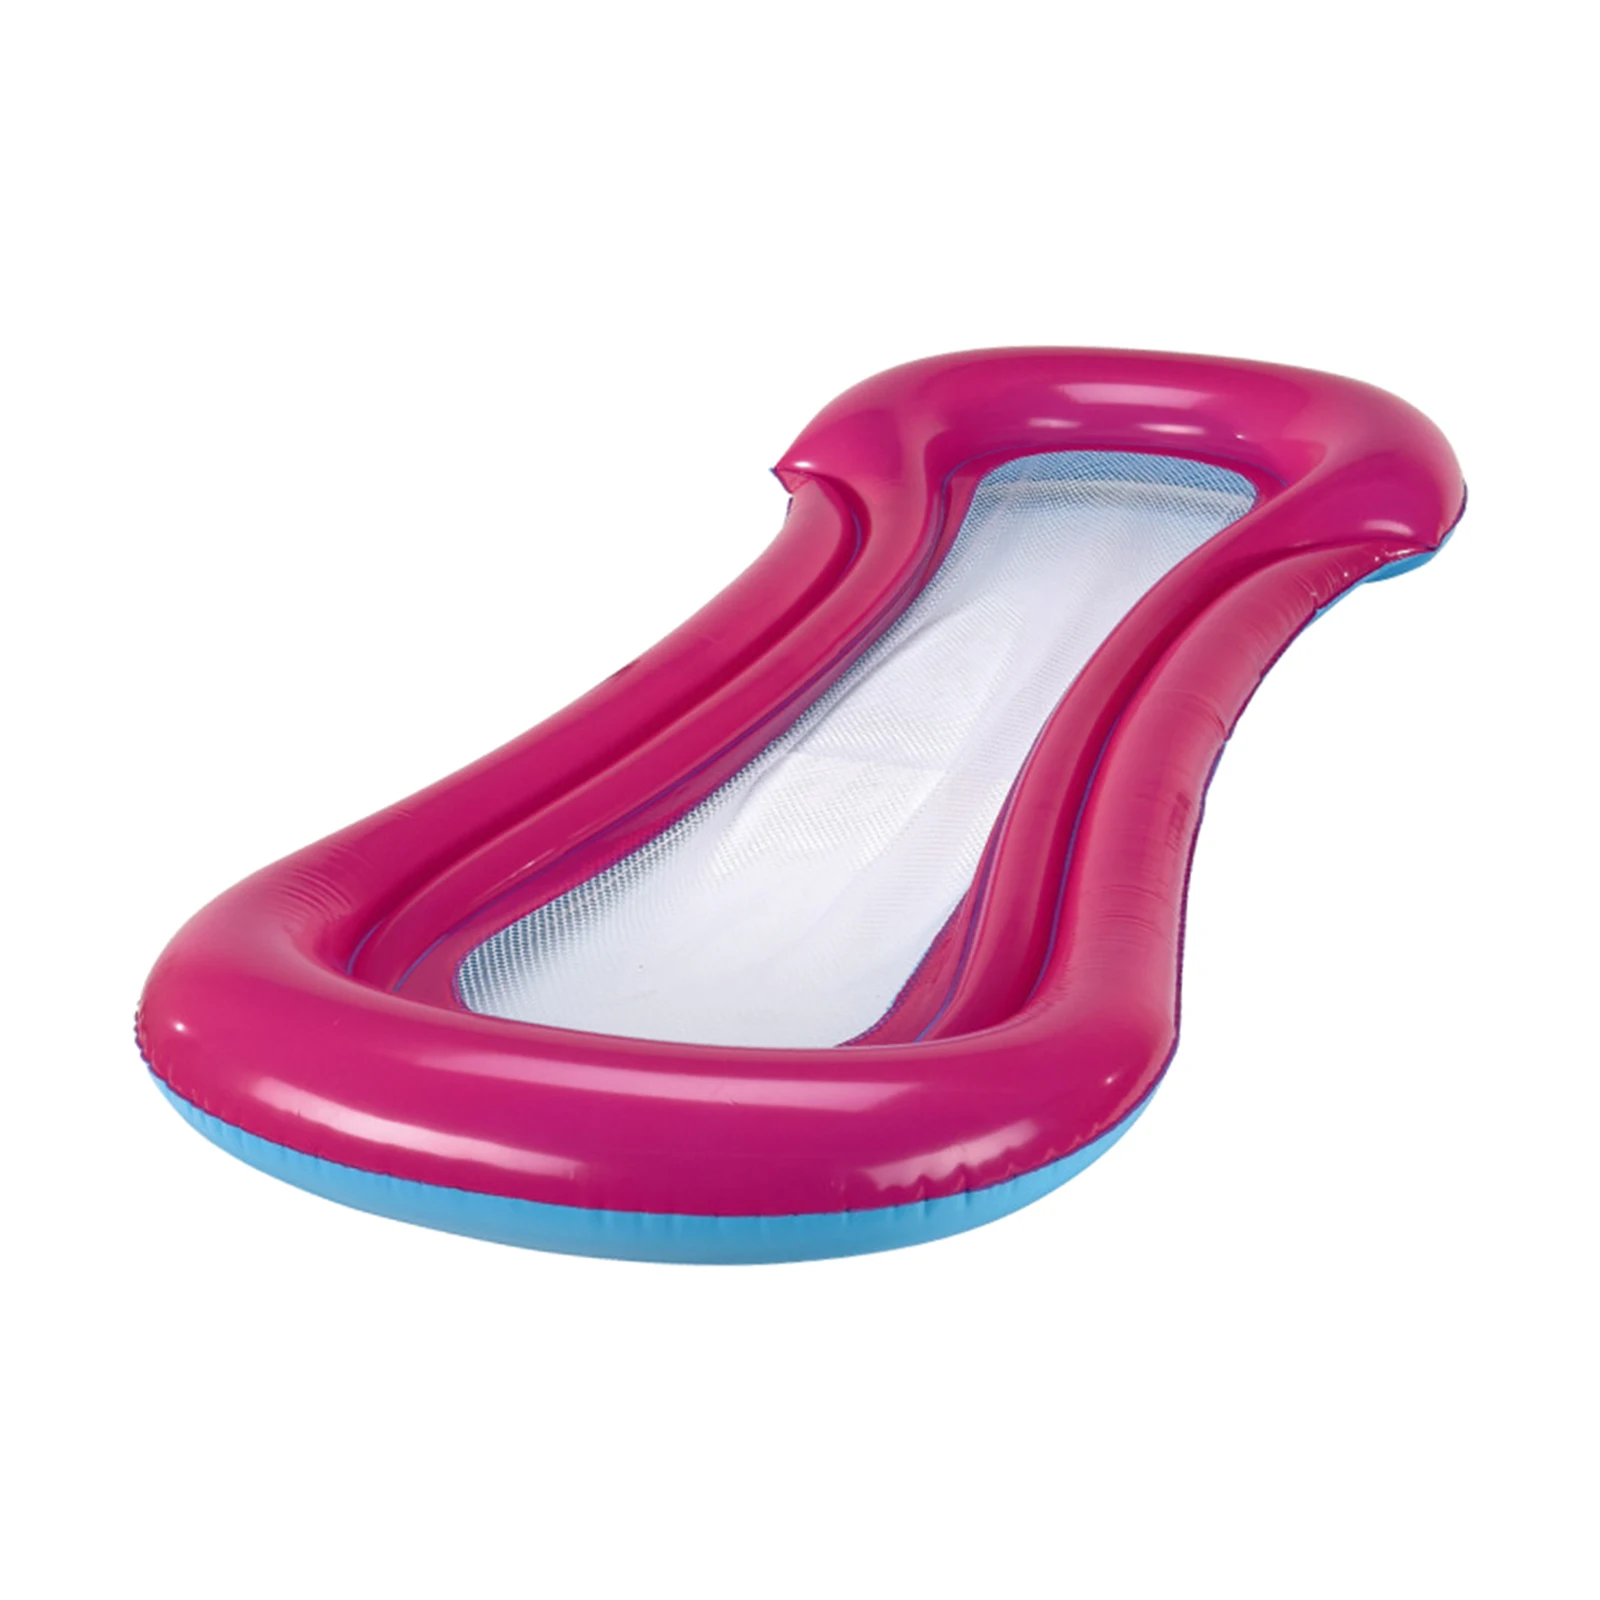 Inflatable Pool Float, Net Floating Bed, Inflatable Pool Floating Lounge Swimming Pool Beach Toy for Women Men